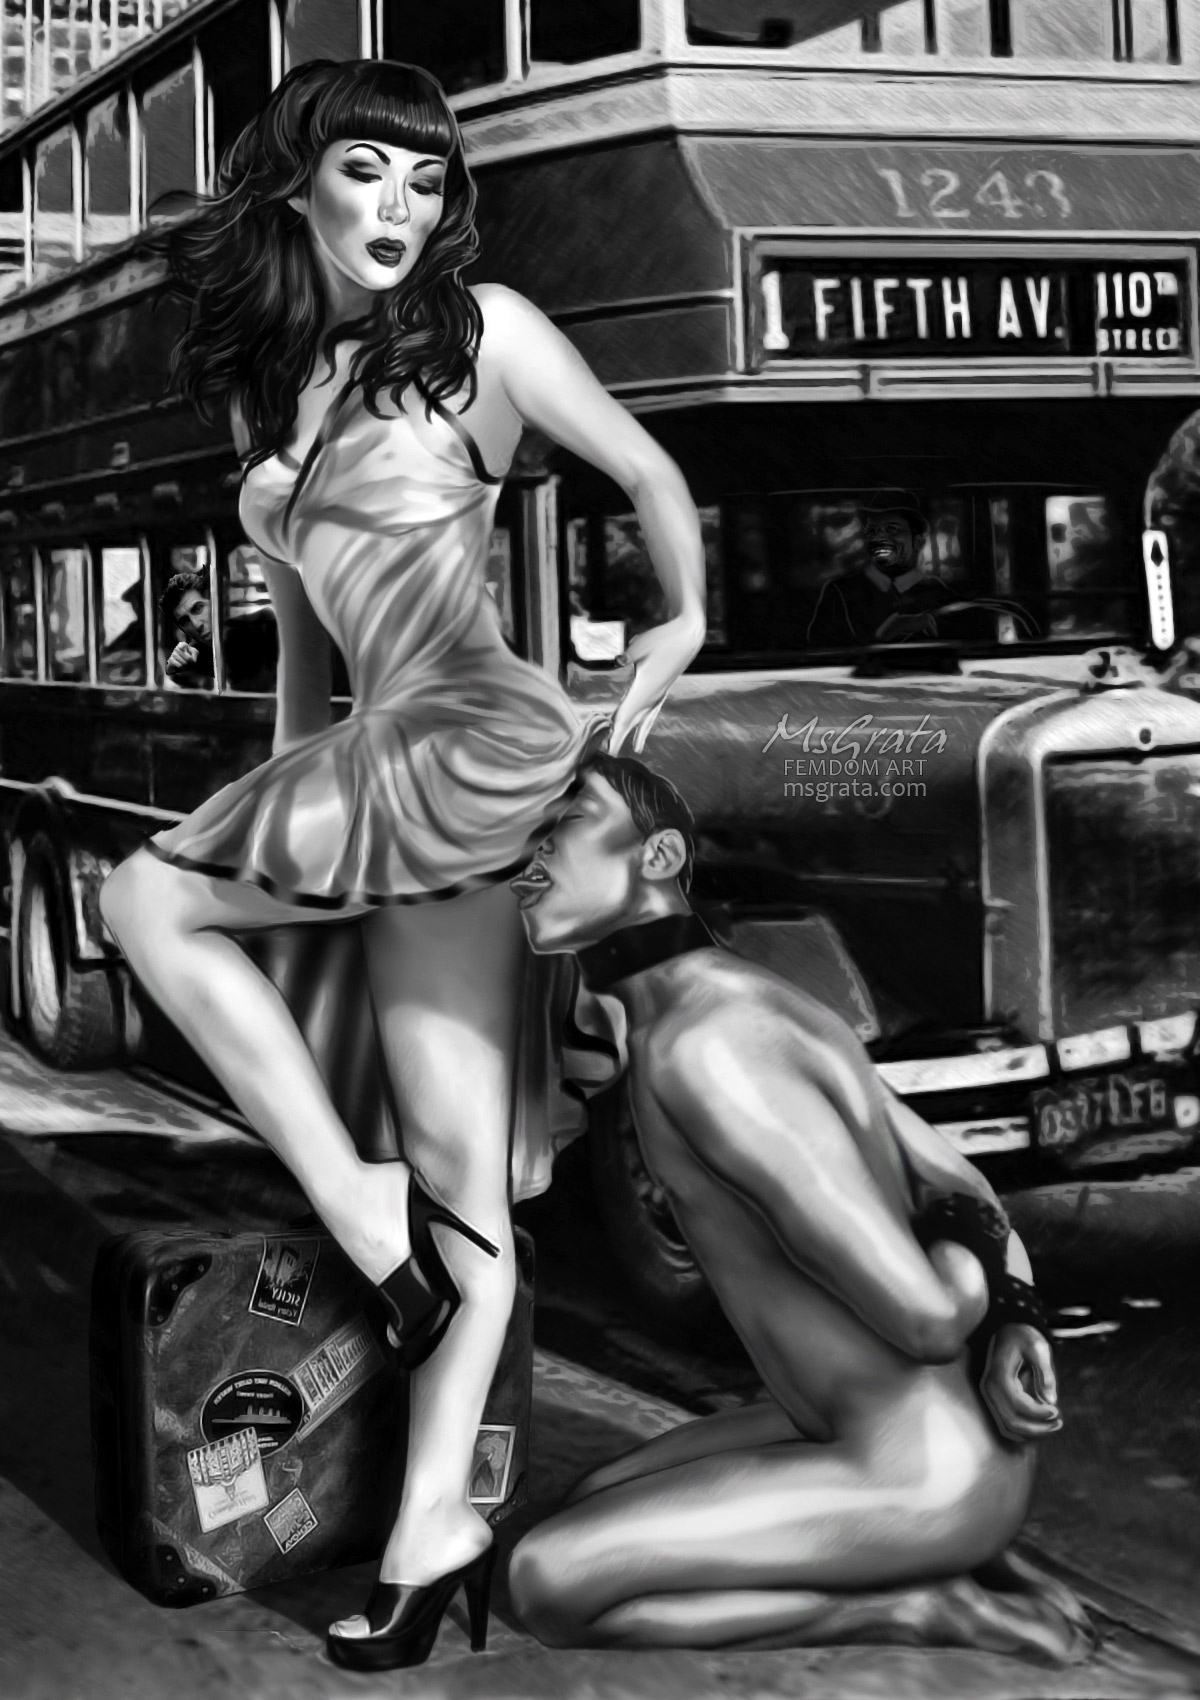 Asian Mistress facesitting slave public humiliation MsGrata's drawn femdom art